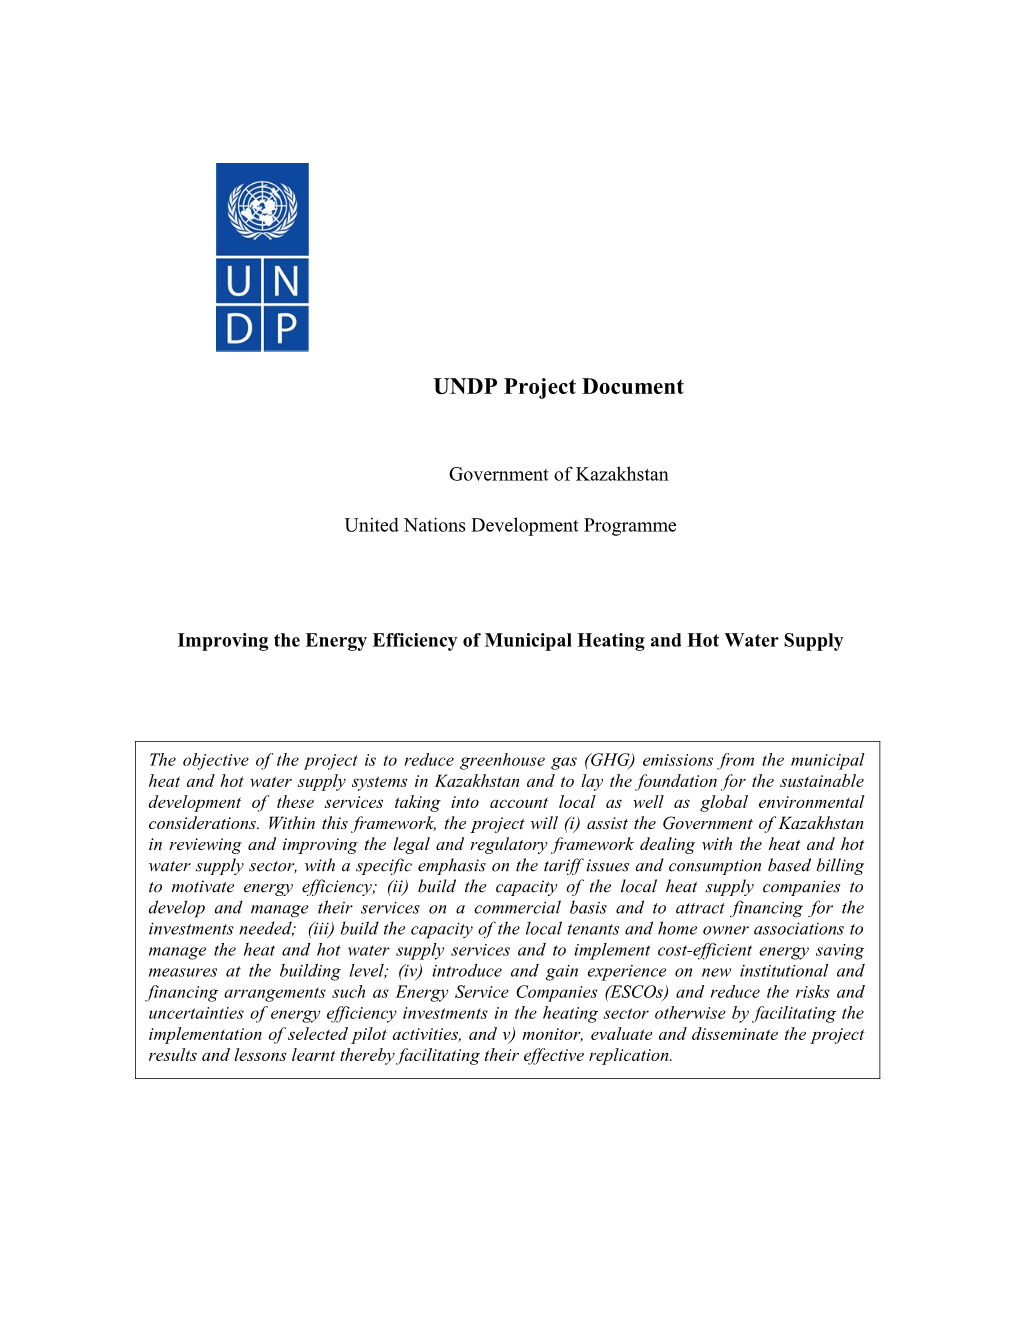 UNDP Project Document s1